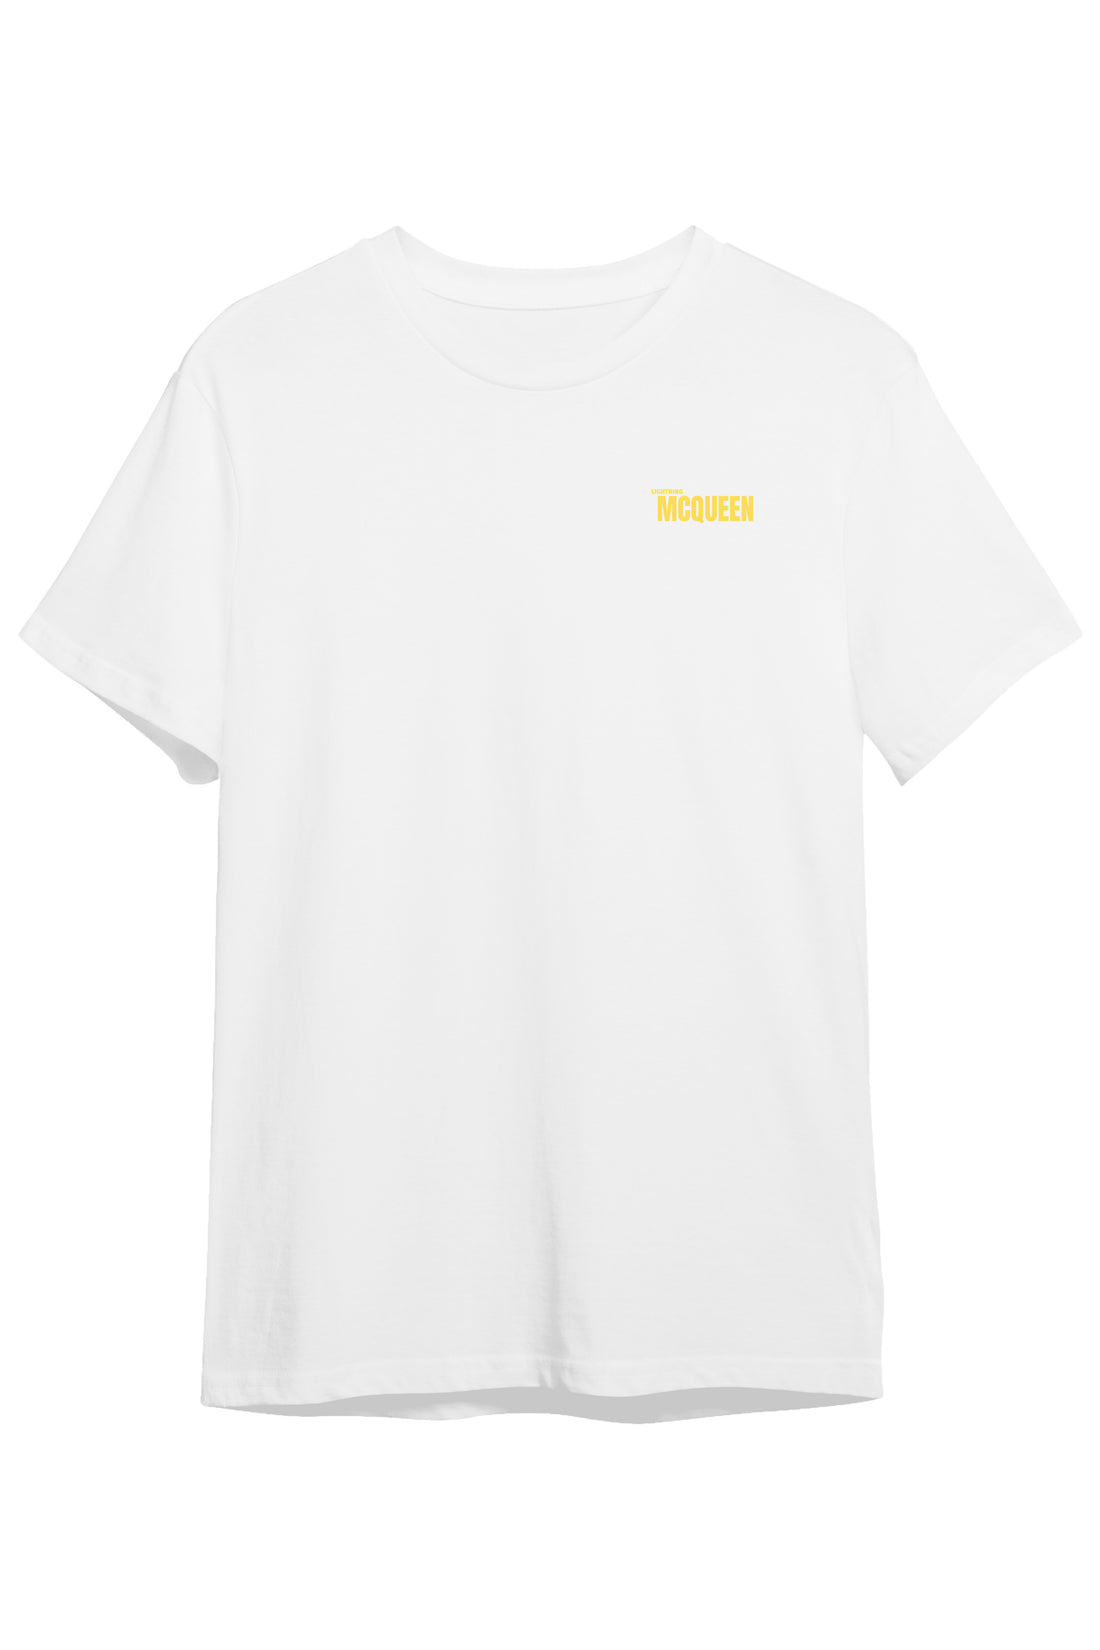 Mcqueen - Regular Tshirt